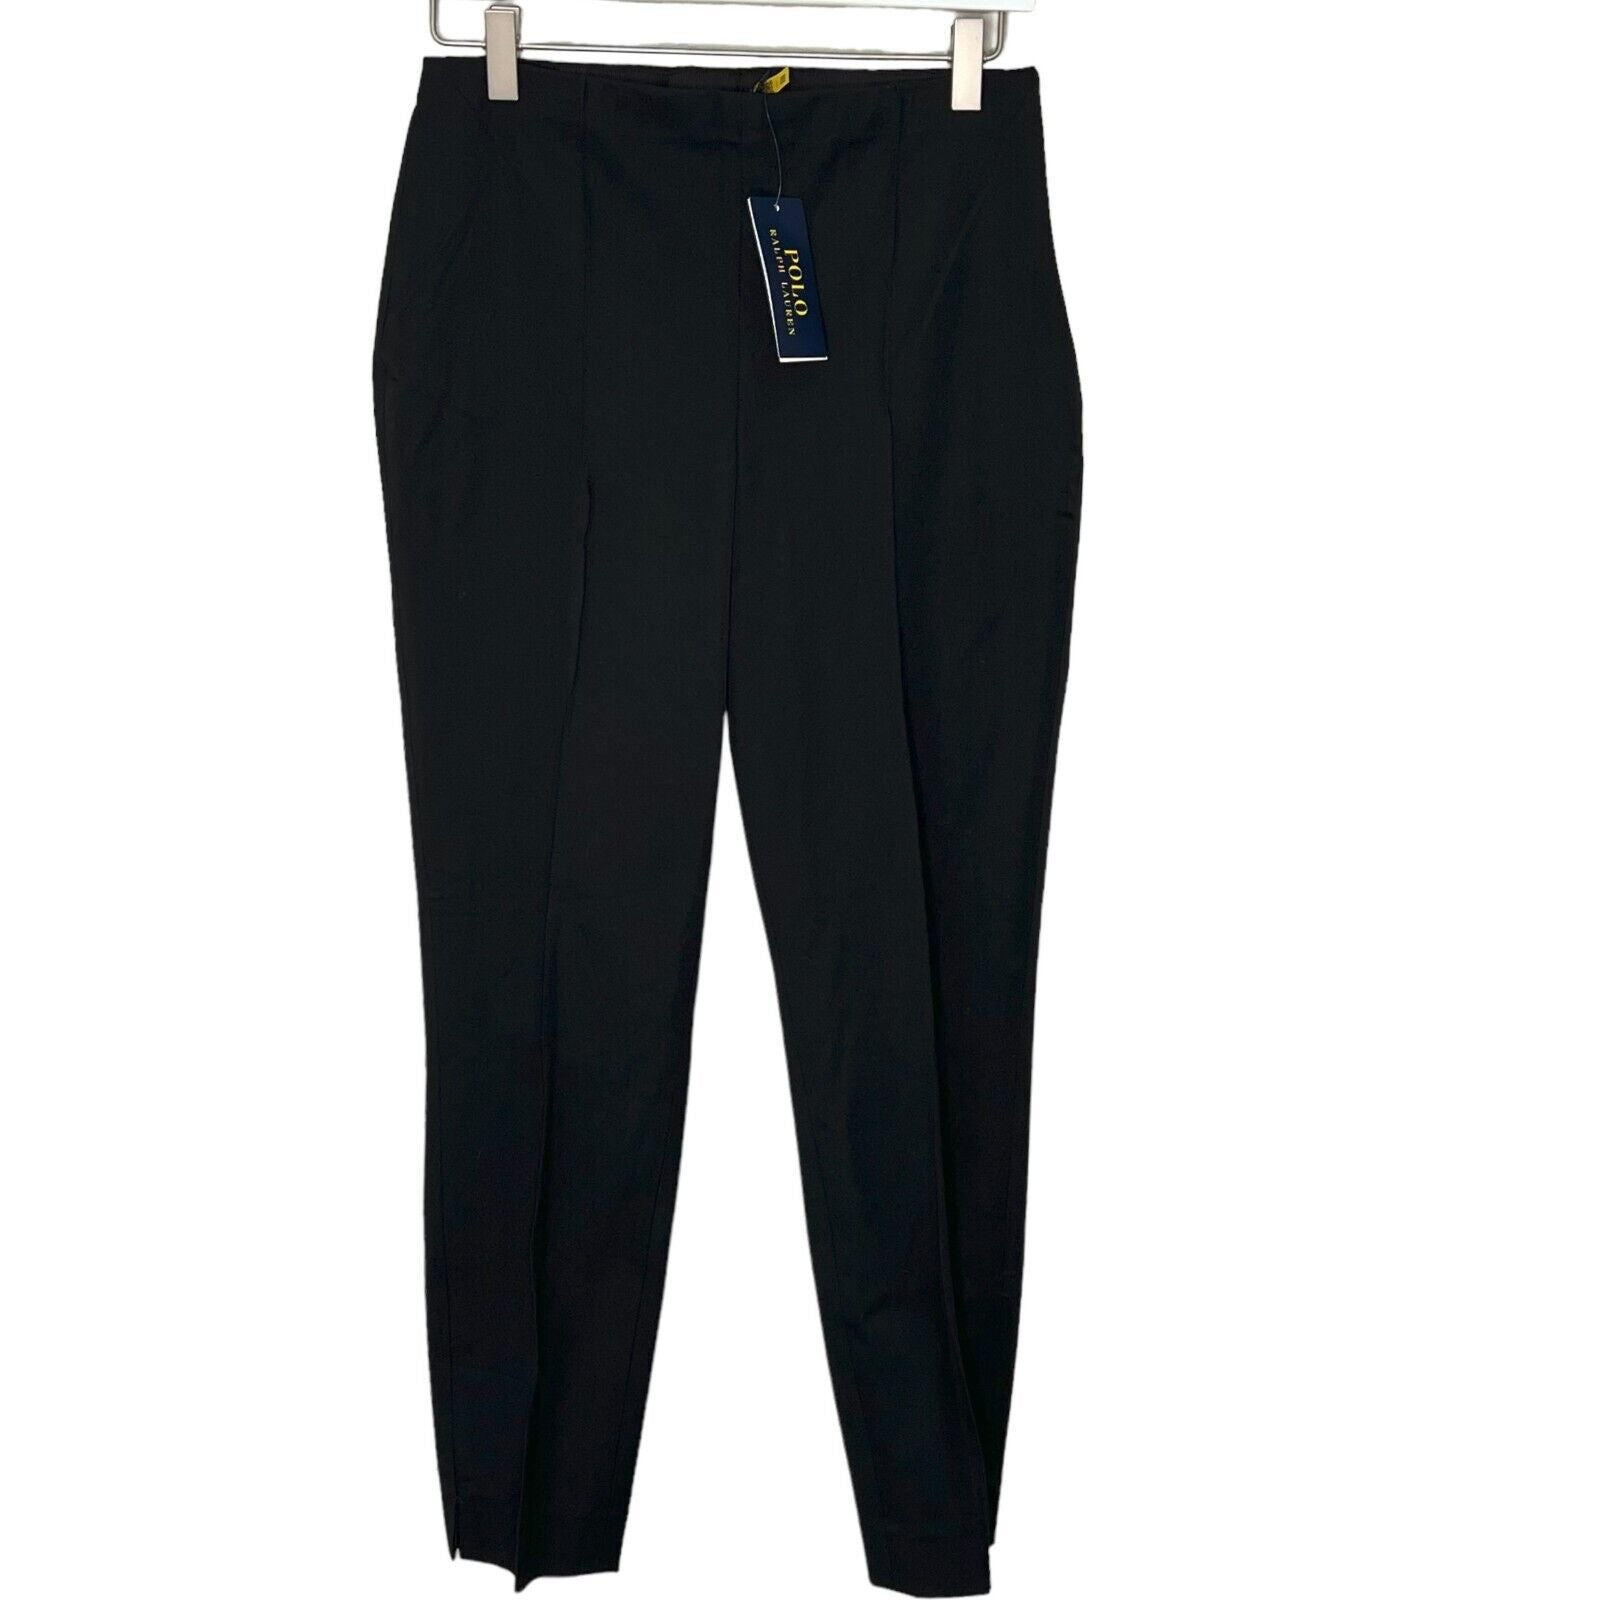 Polo Ralph Lauren Jogger Women ColorBlock Black Red Sweat Pants Size L |  eBay